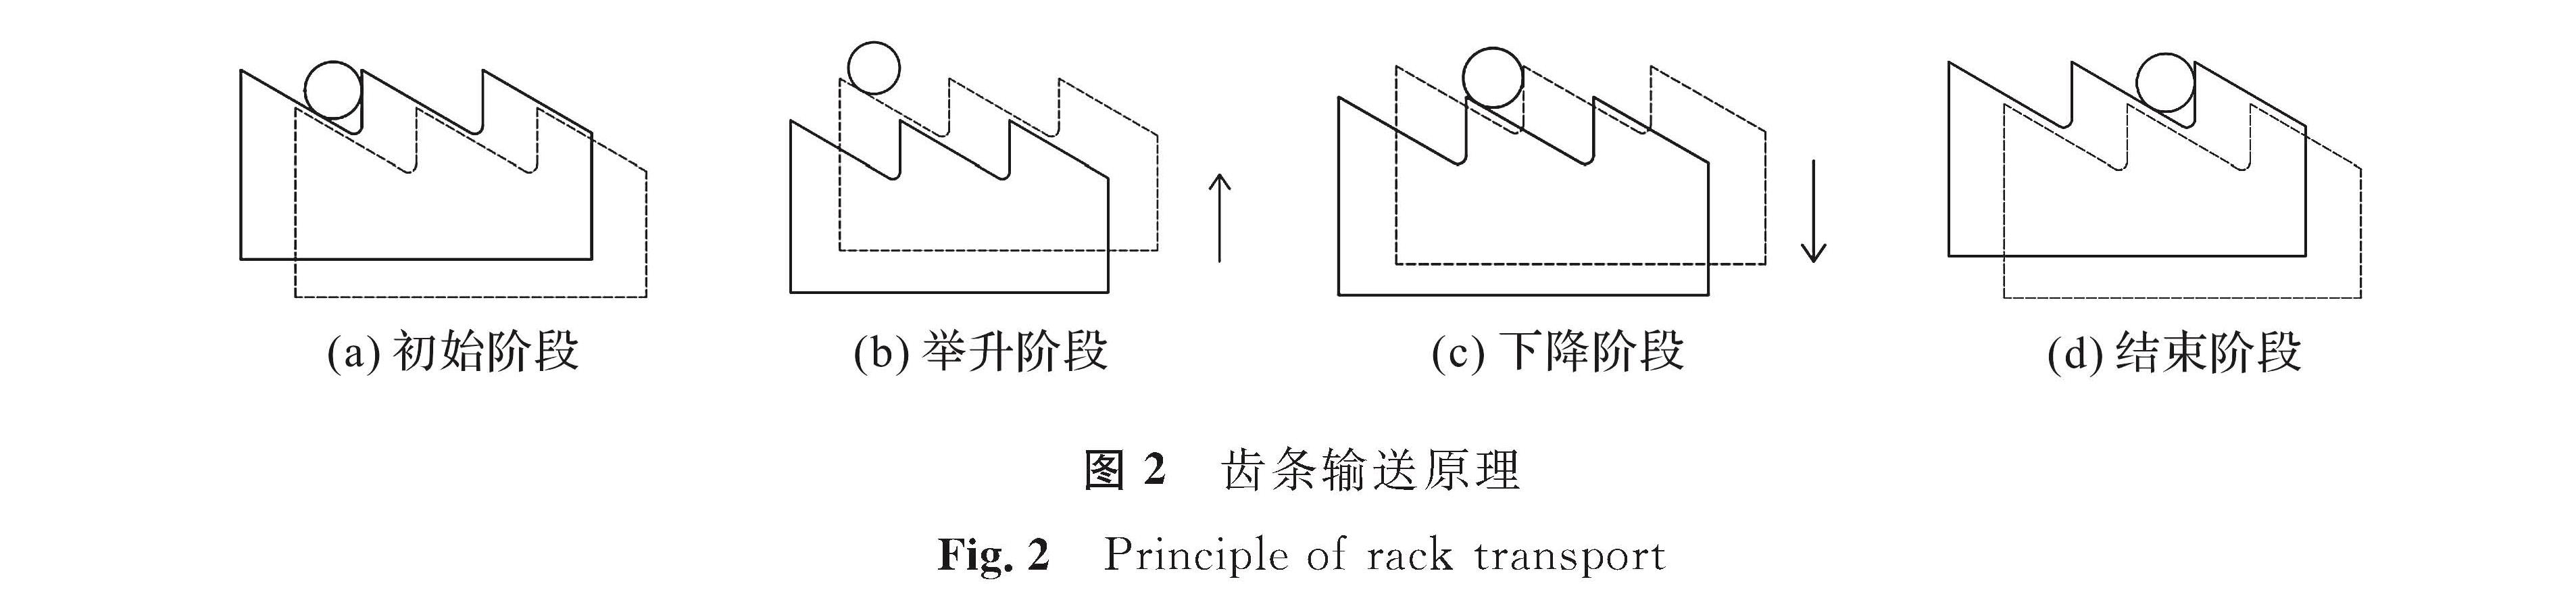 图2 齿条输送原理<br/>Fig.2 Principle of rack transport